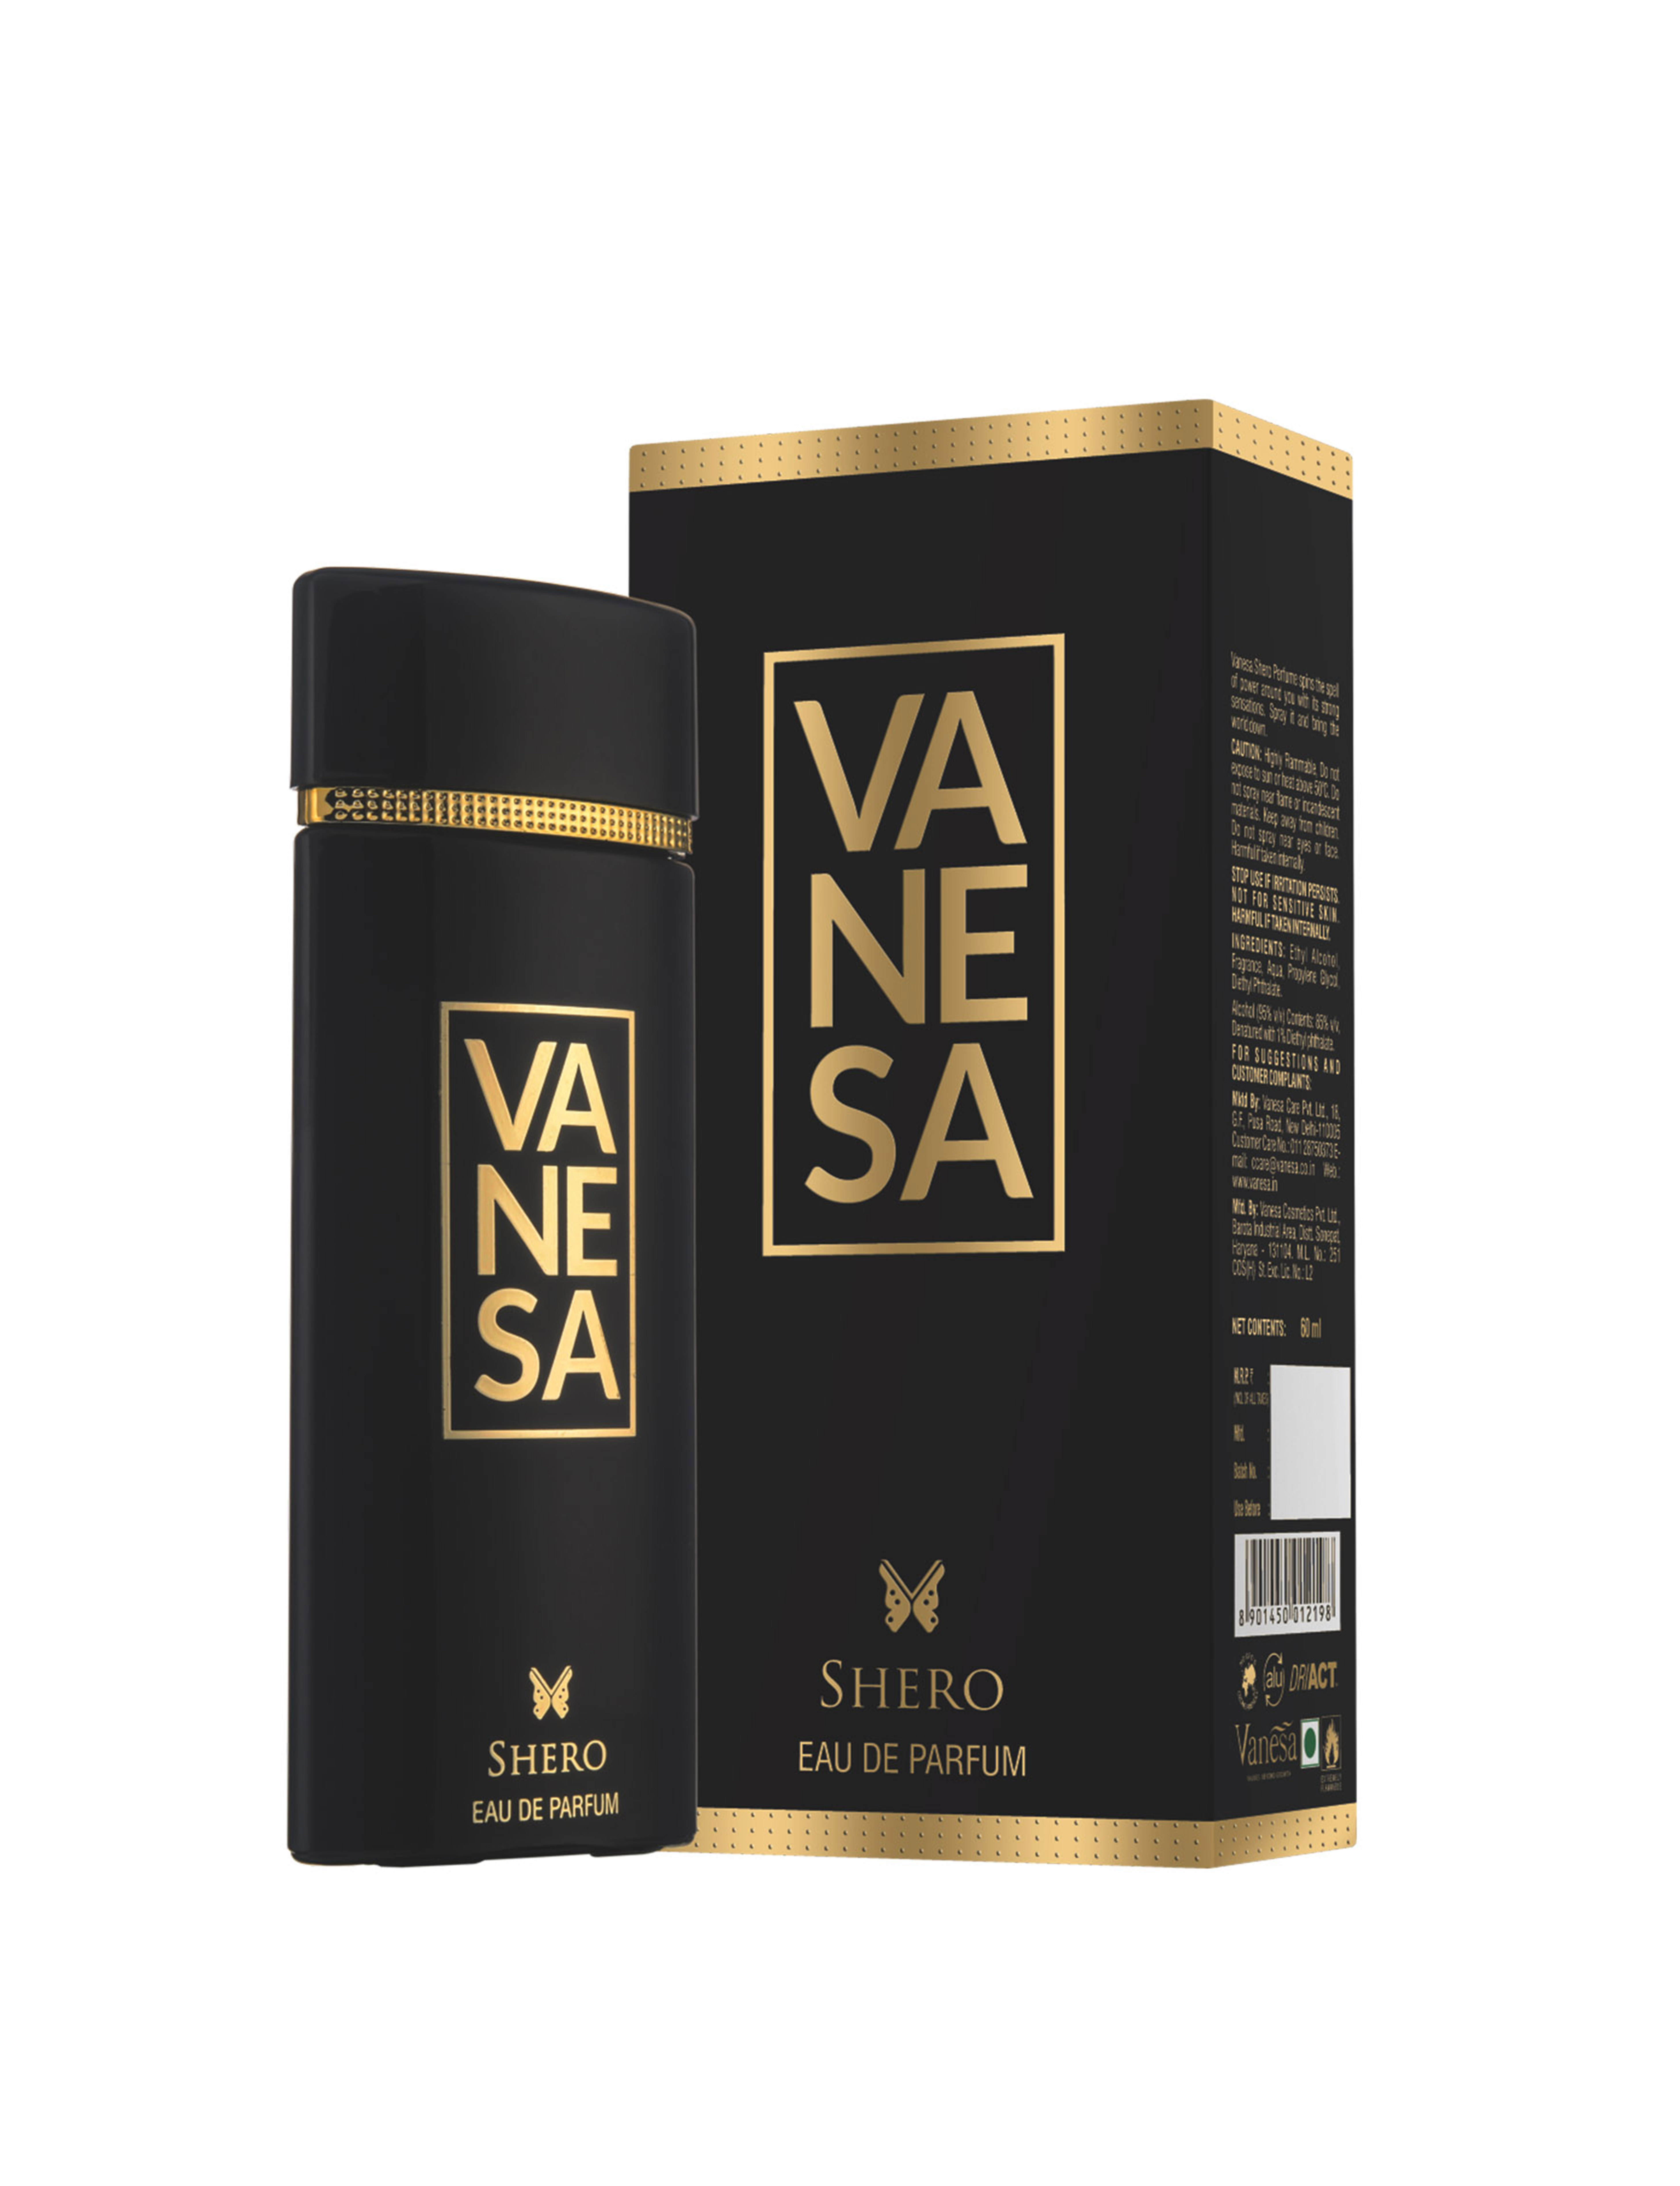 Vanesa’s Shero for long-lasting fragrance